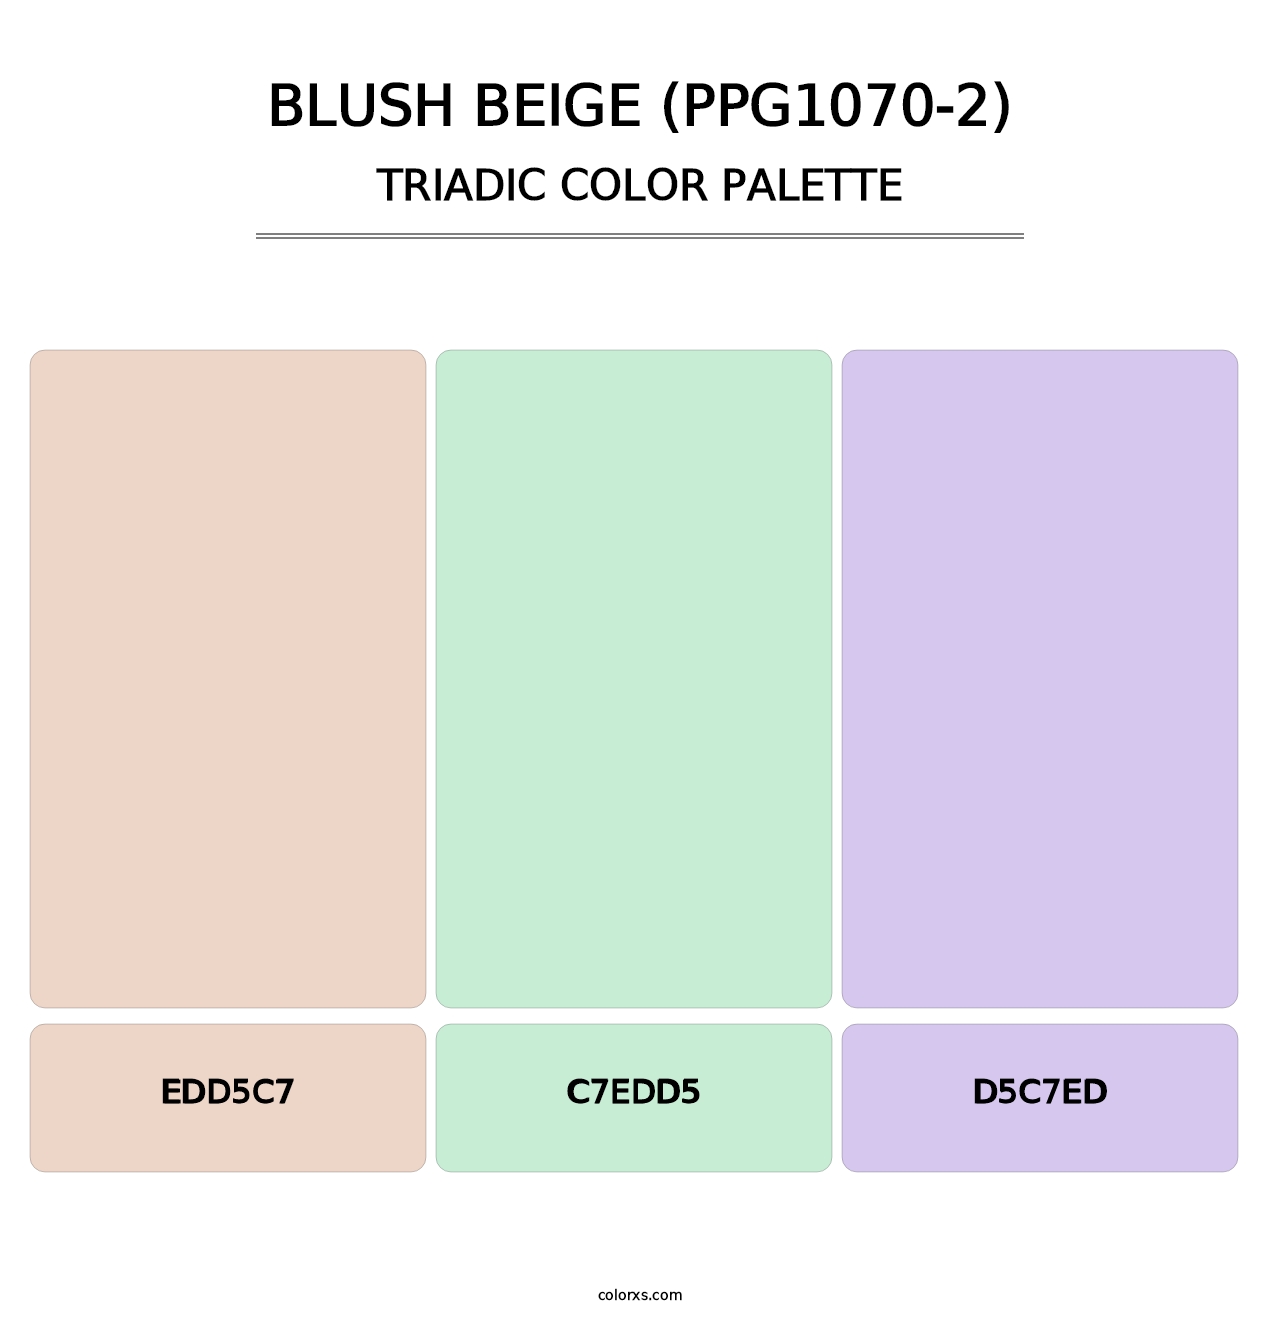 Blush Beige (PPG1070-2) - Triadic Color Palette